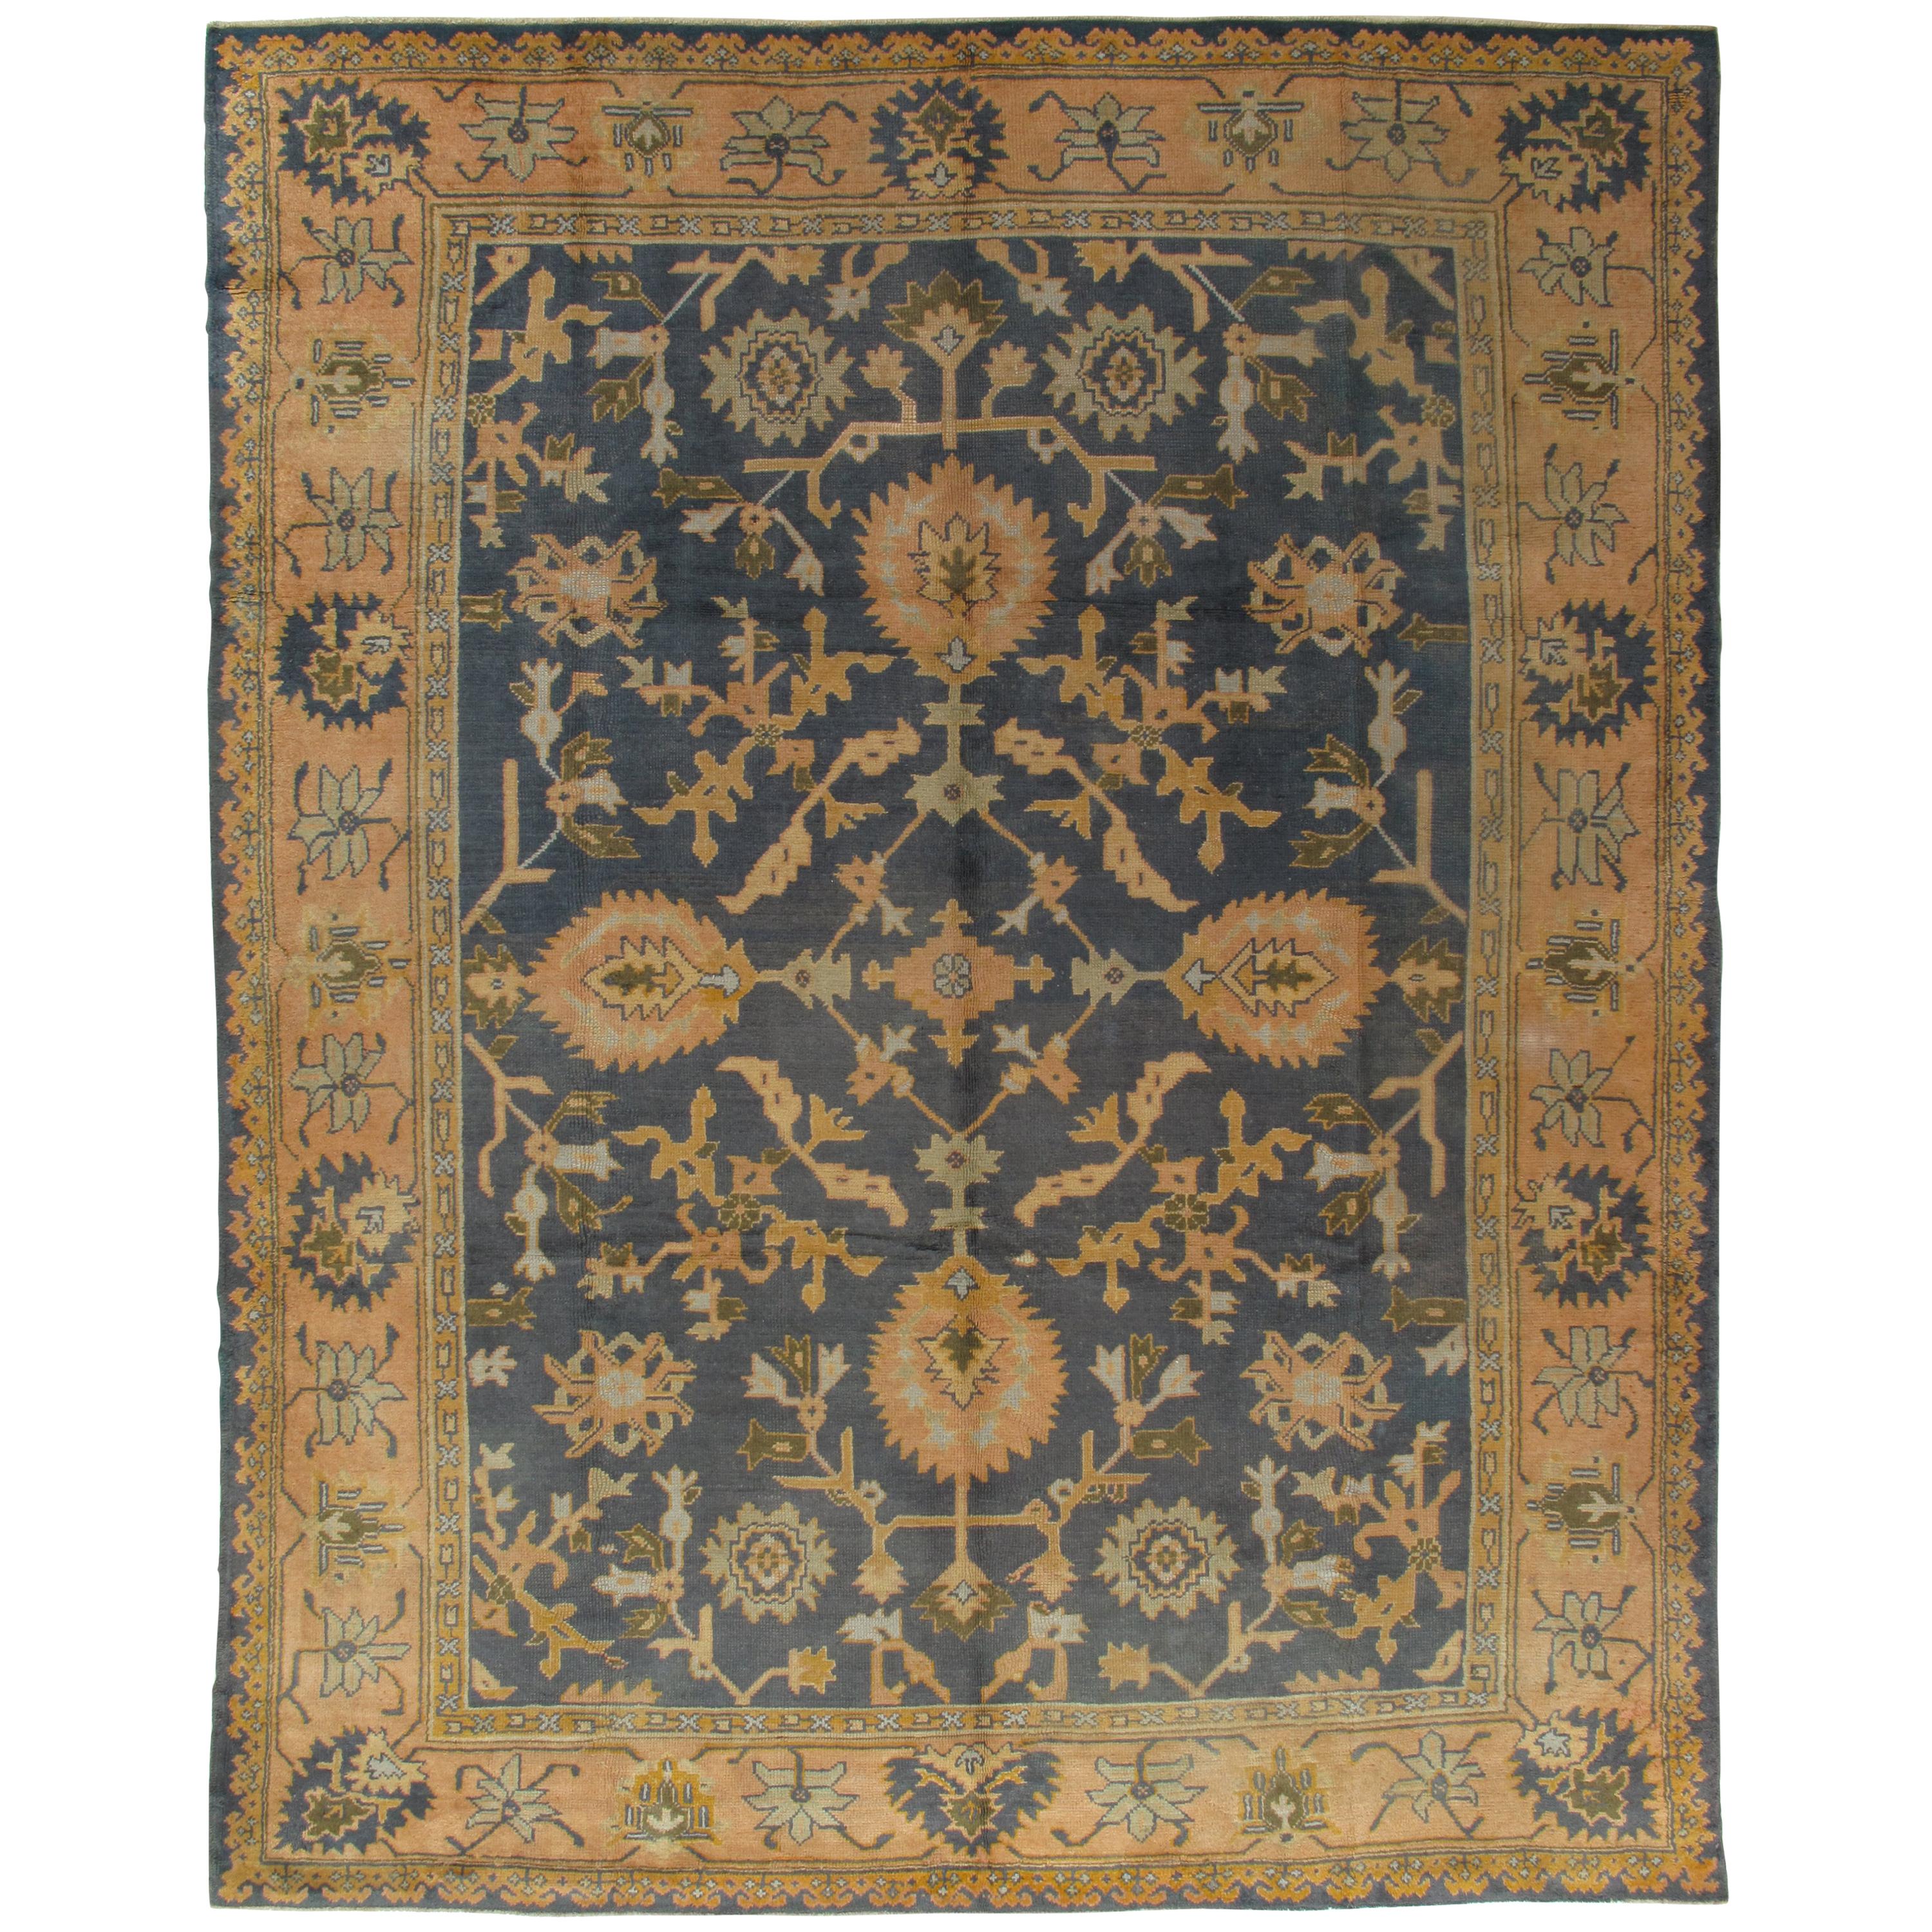 Antique Oushak Carpet, Handmade Oriental Rug Made in Turkey, Peach, Blue, Ivory